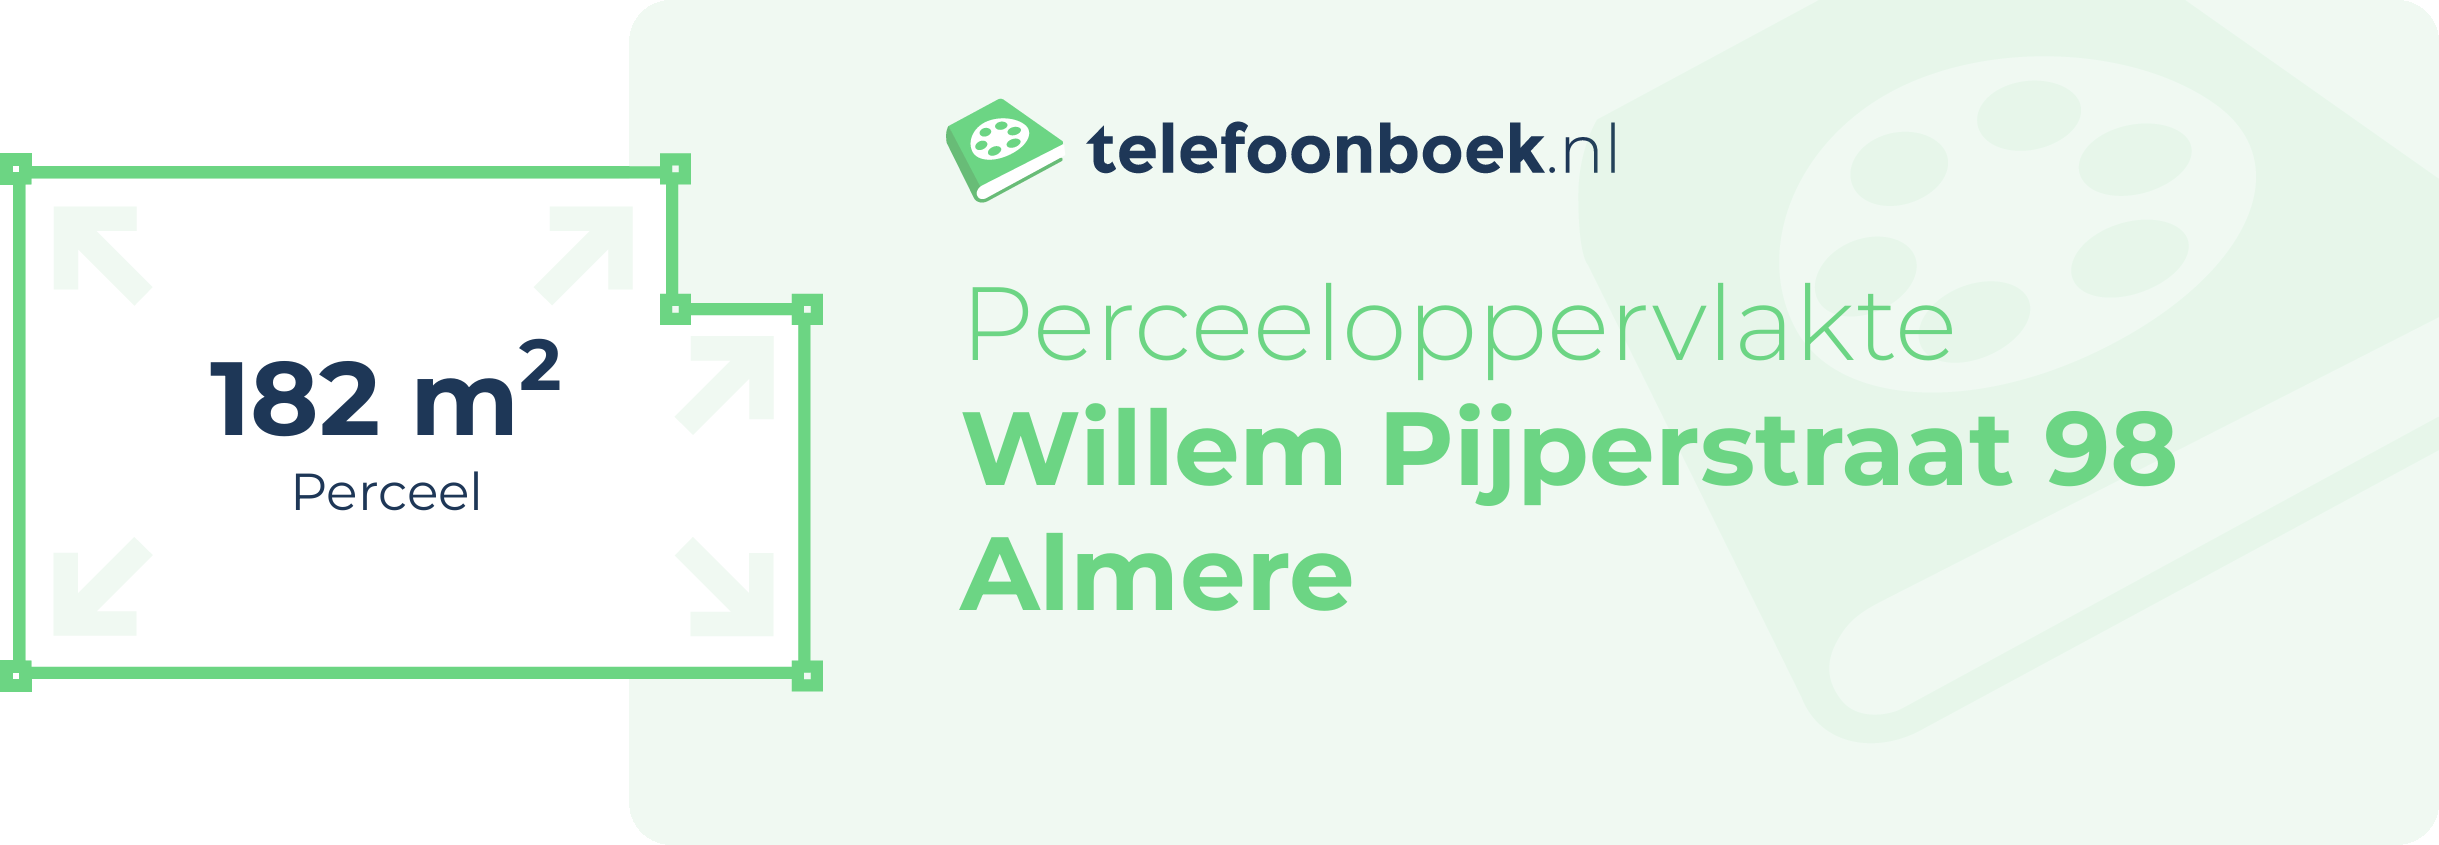 Perceeloppervlakte Willem Pijperstraat 98 Almere